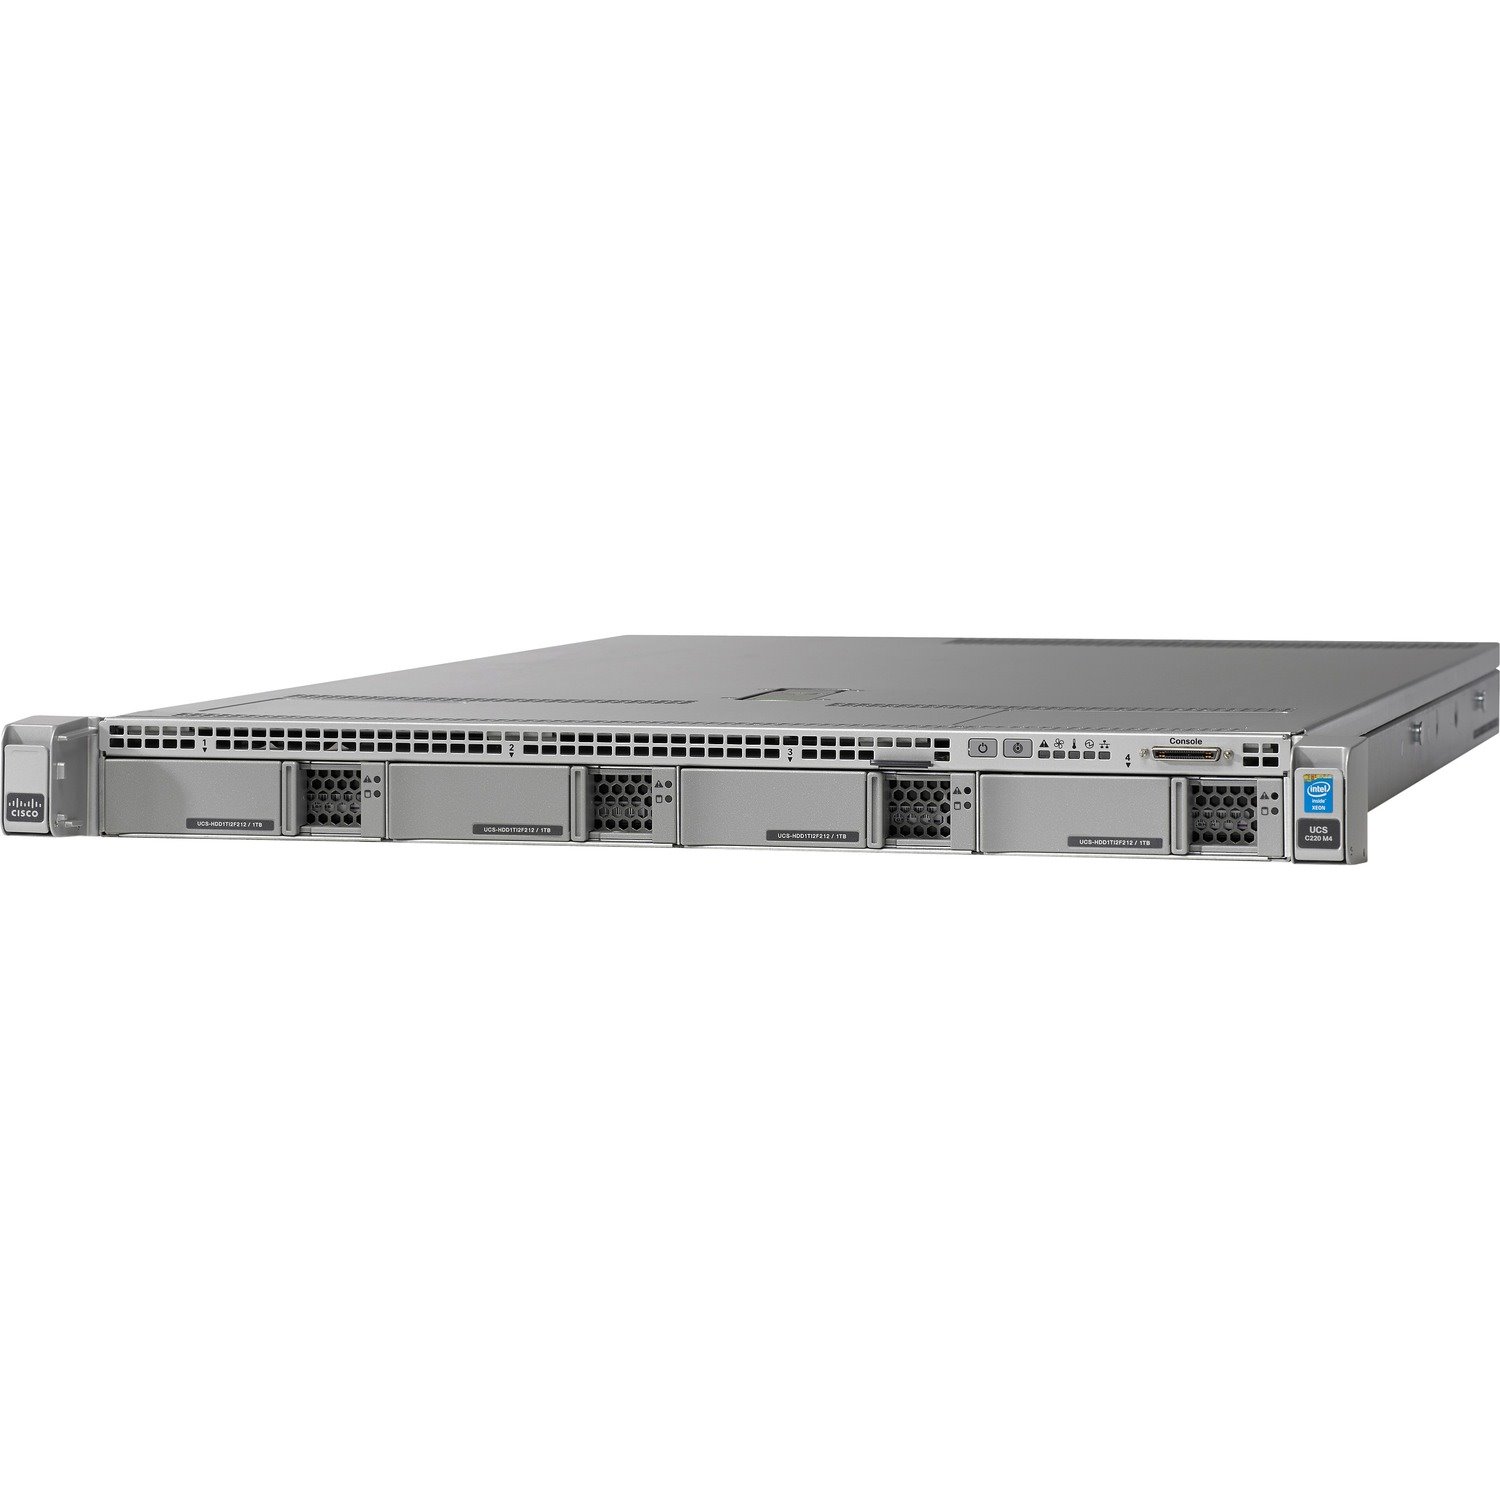 Cisco C220 1U Rack Server - 1 x Intel Xeon E5-2609 2.40 GHz - 8 GB RAM - Serial ATA, Serial Attached SCSI (SAS) Controller